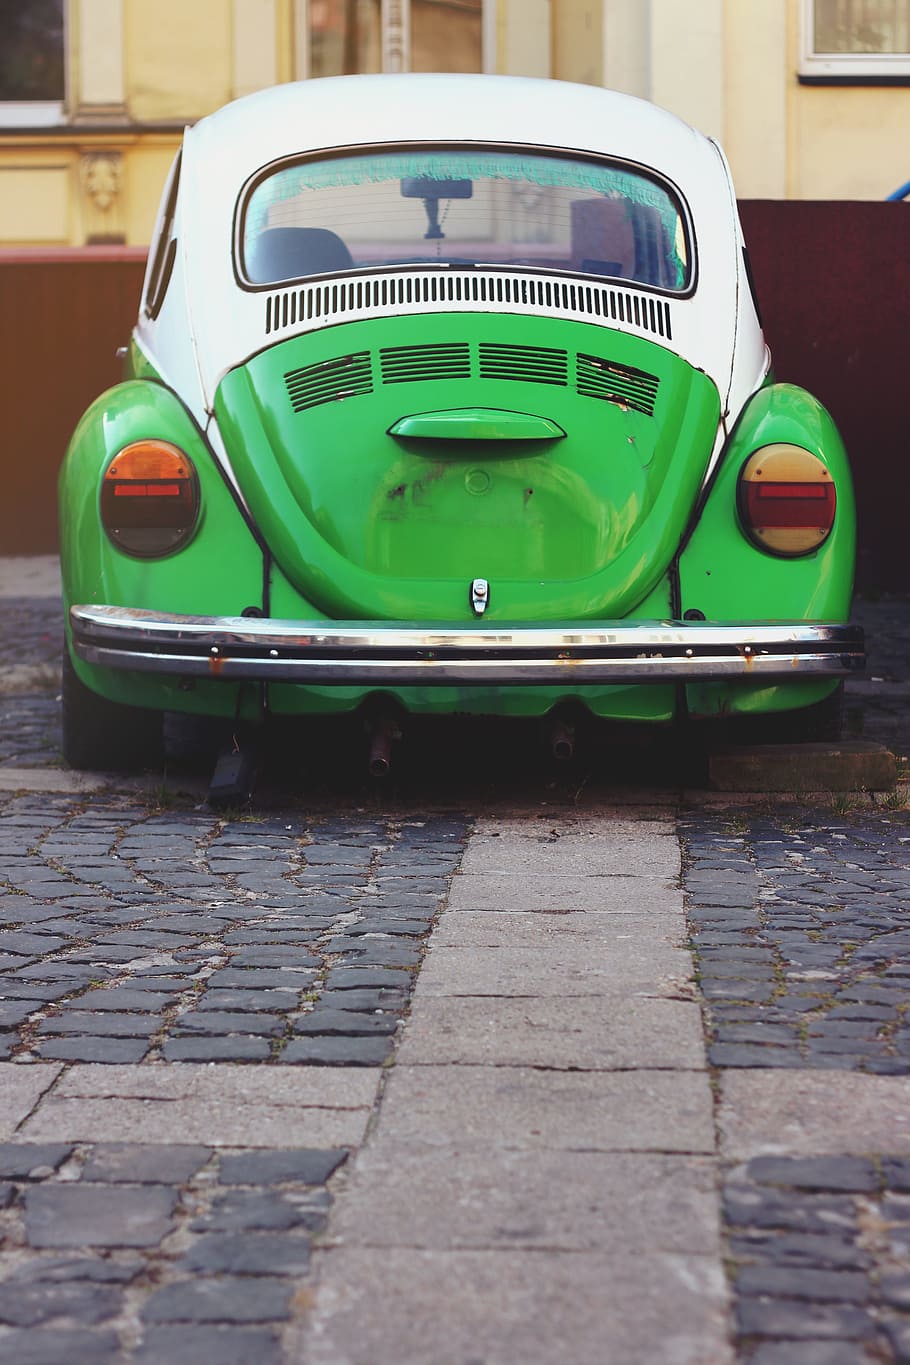 hijau, putih, volkswagen beetle tipe 1, parkir, pinggir jalan, siang hari, mobil, vw, volkswagen, beetle